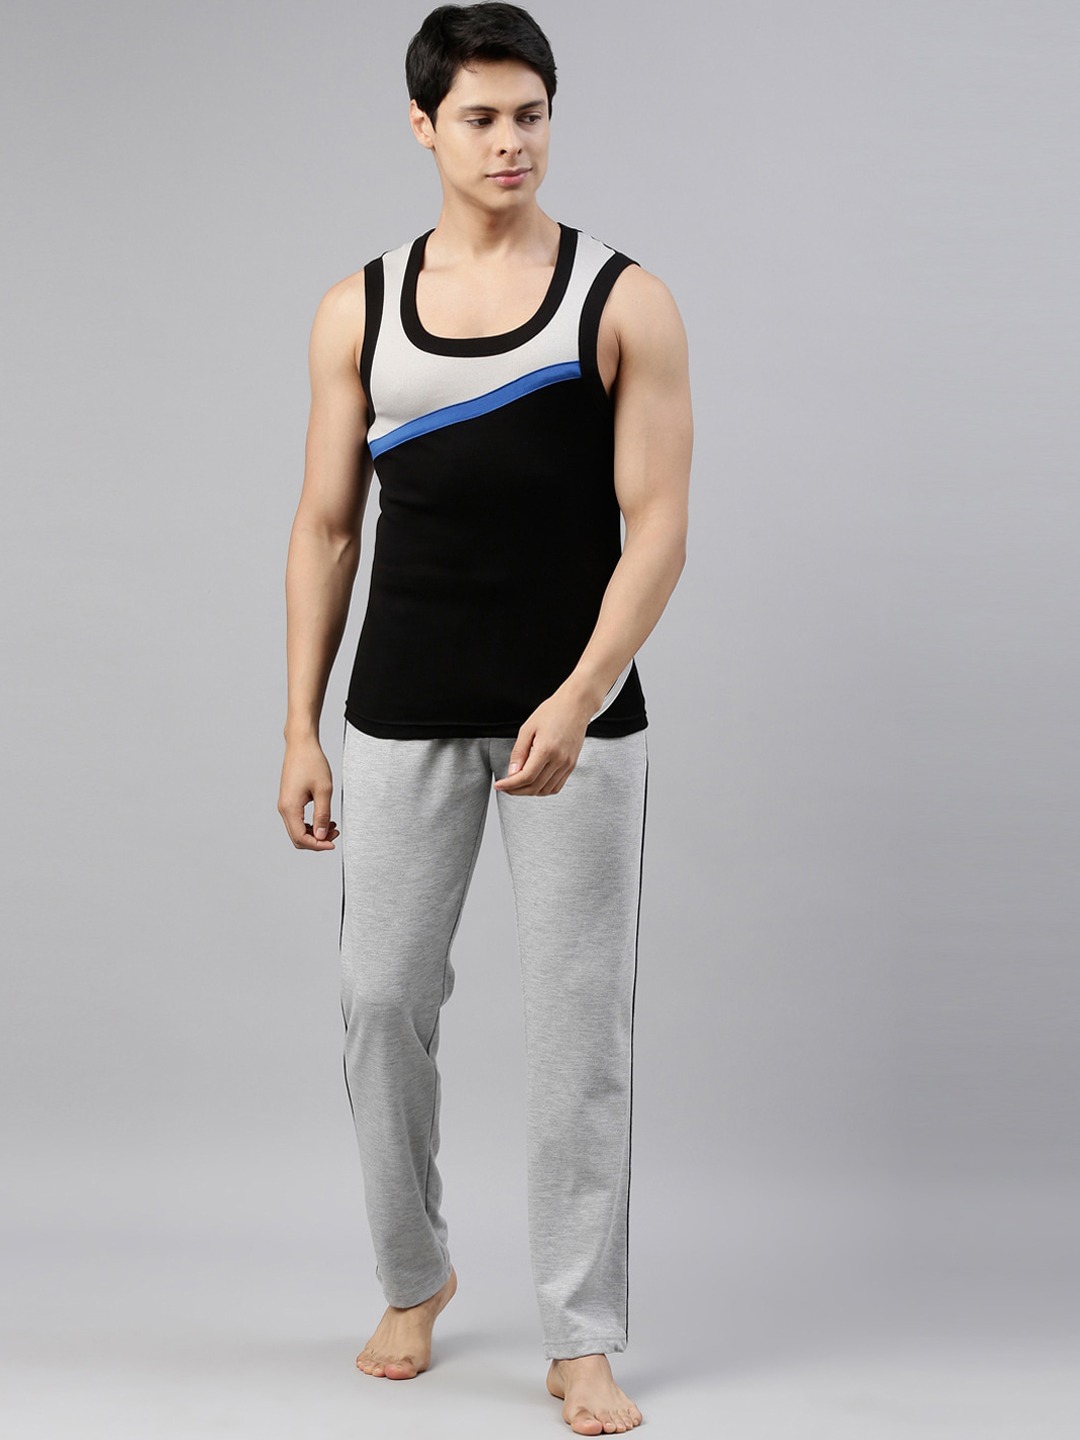 Clothing Innerwear Vests | DIXCY SCOTT Men Black & Navy Blue Solid Cotton Gym Vests Pack Of 2 - DZ98750